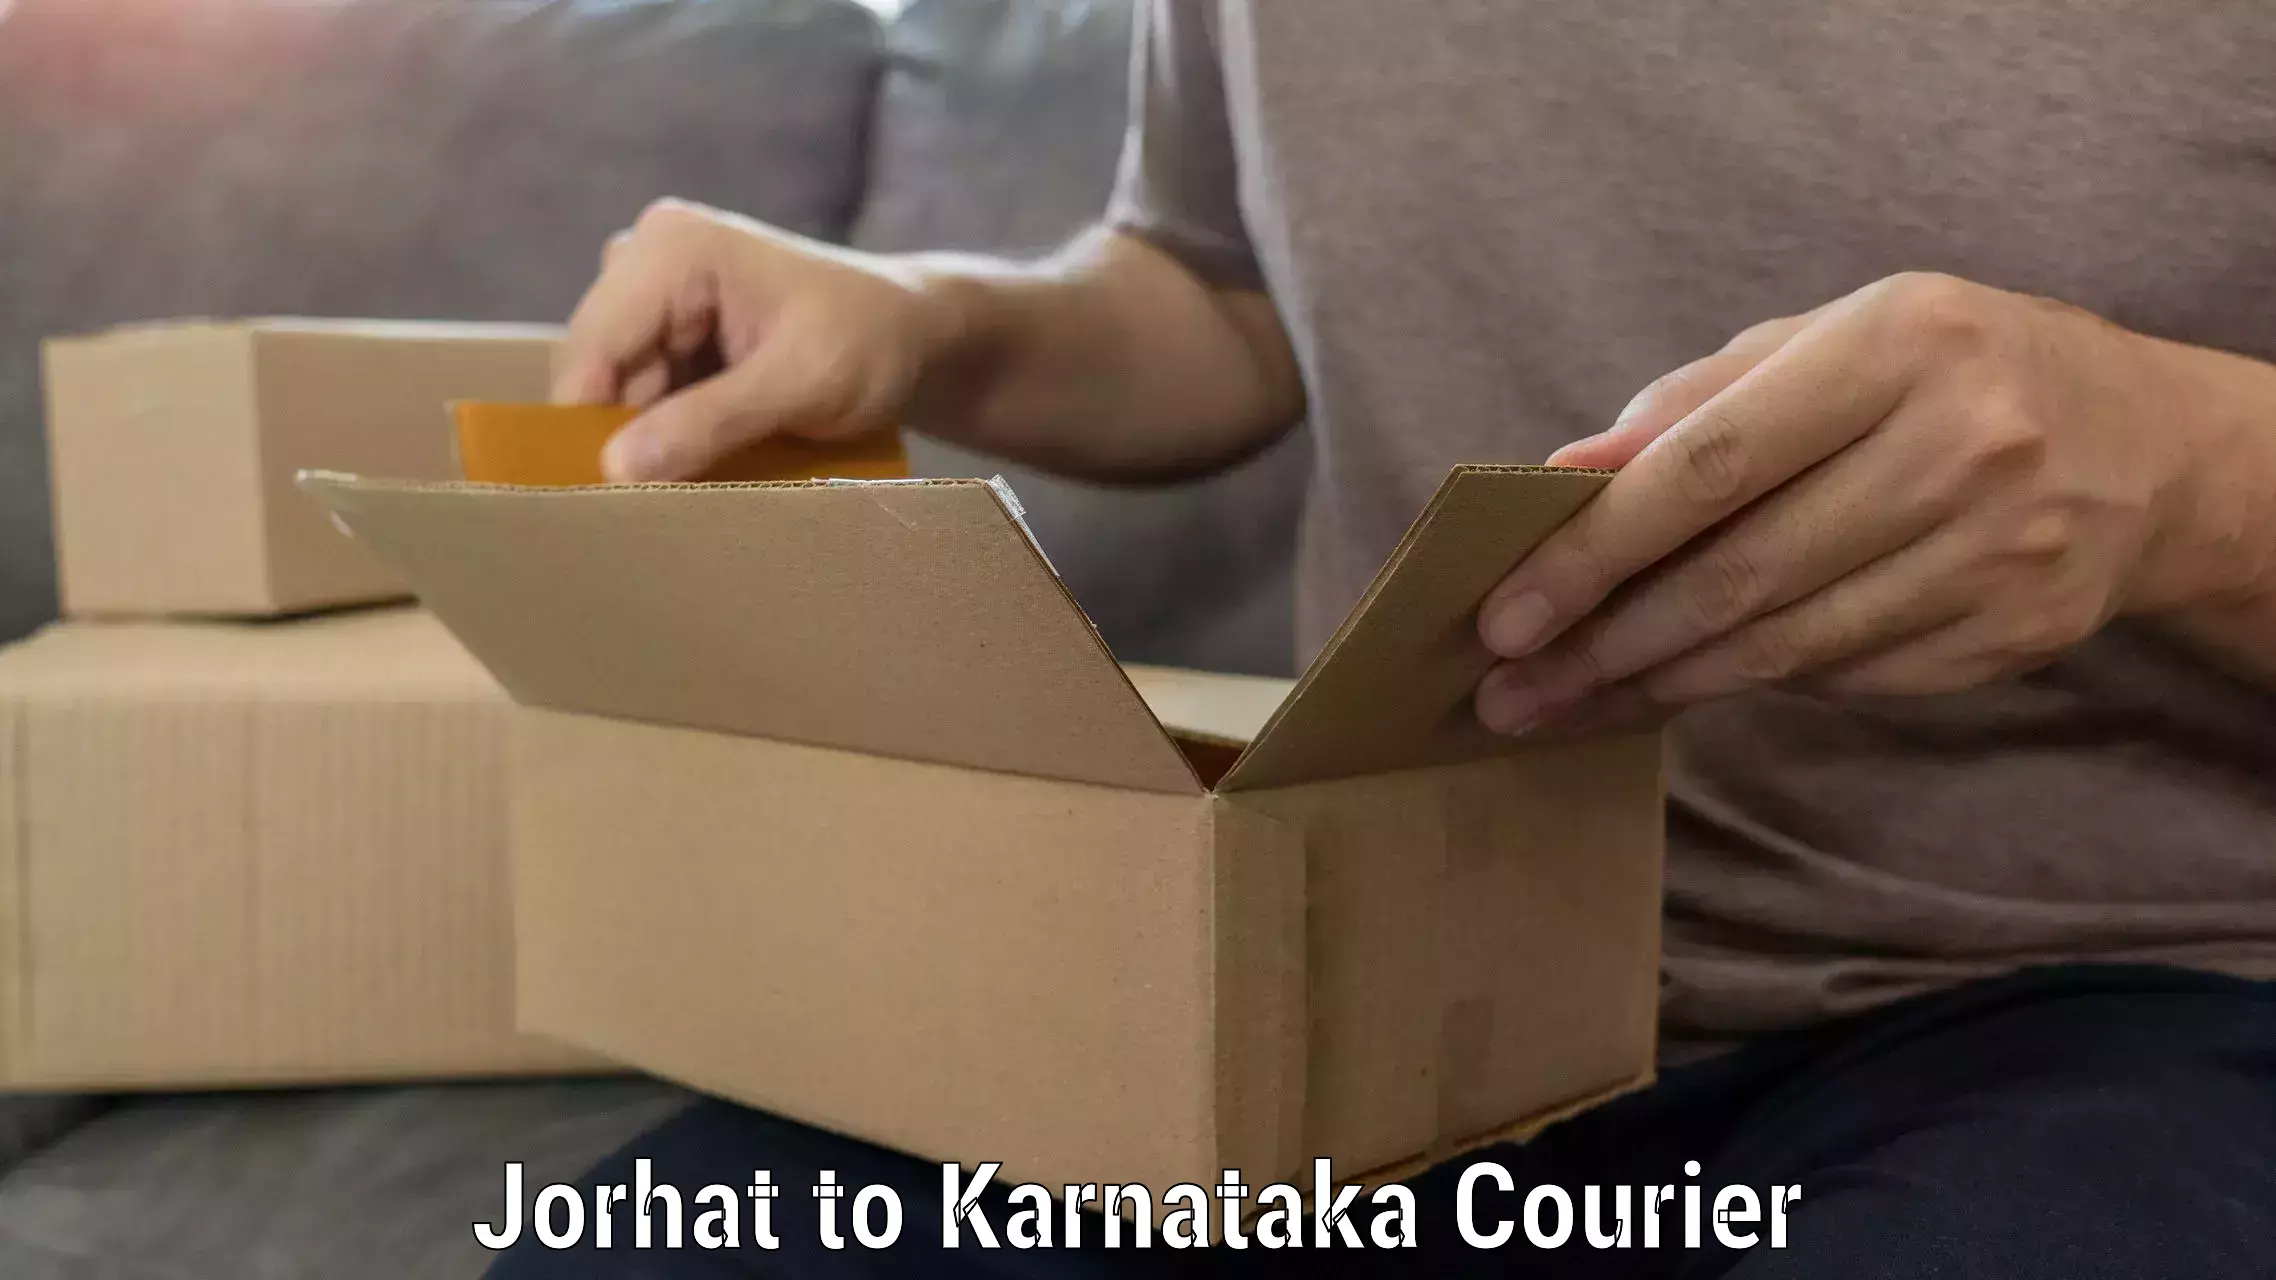 Furniture delivery service Jorhat to Mysore University